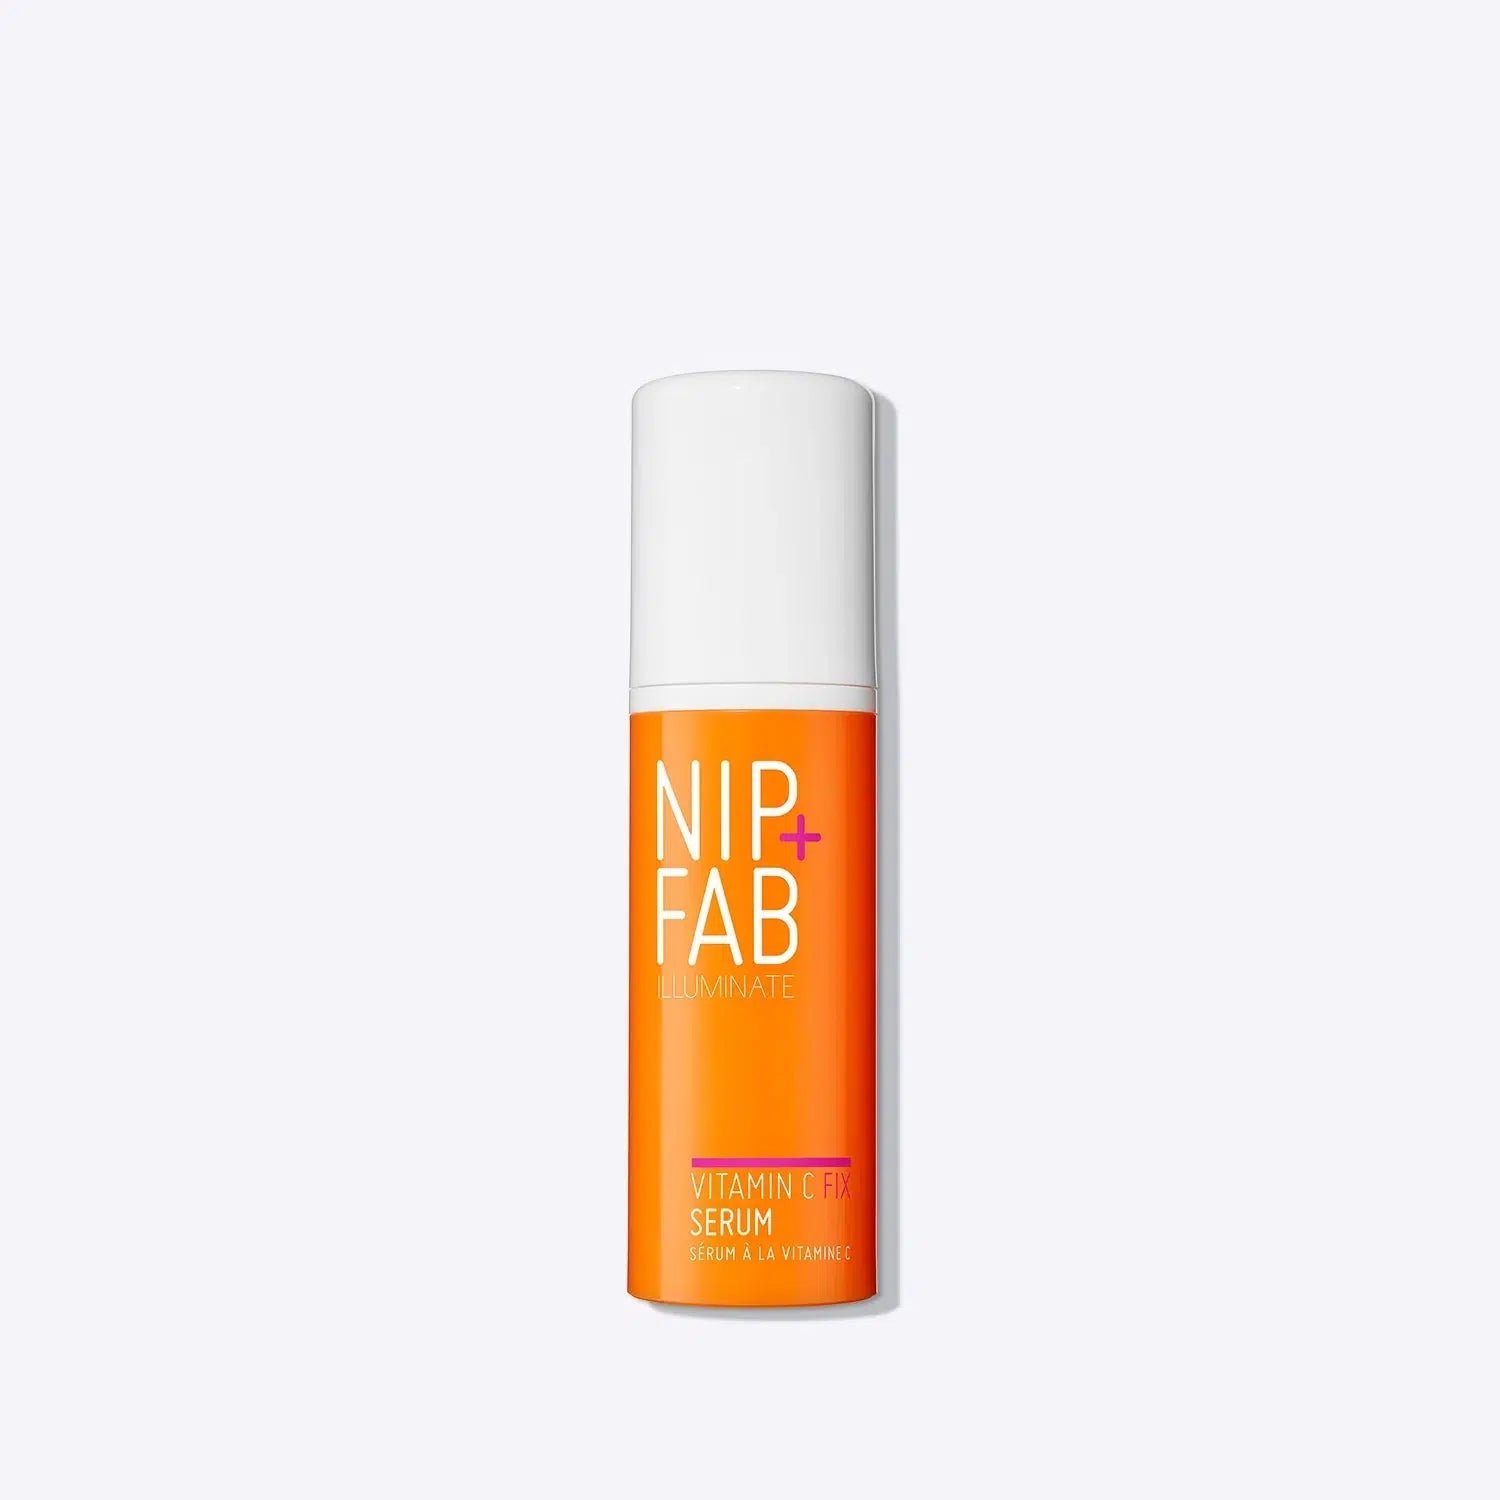 NIP + FAB Vitamin C Serum 50ml